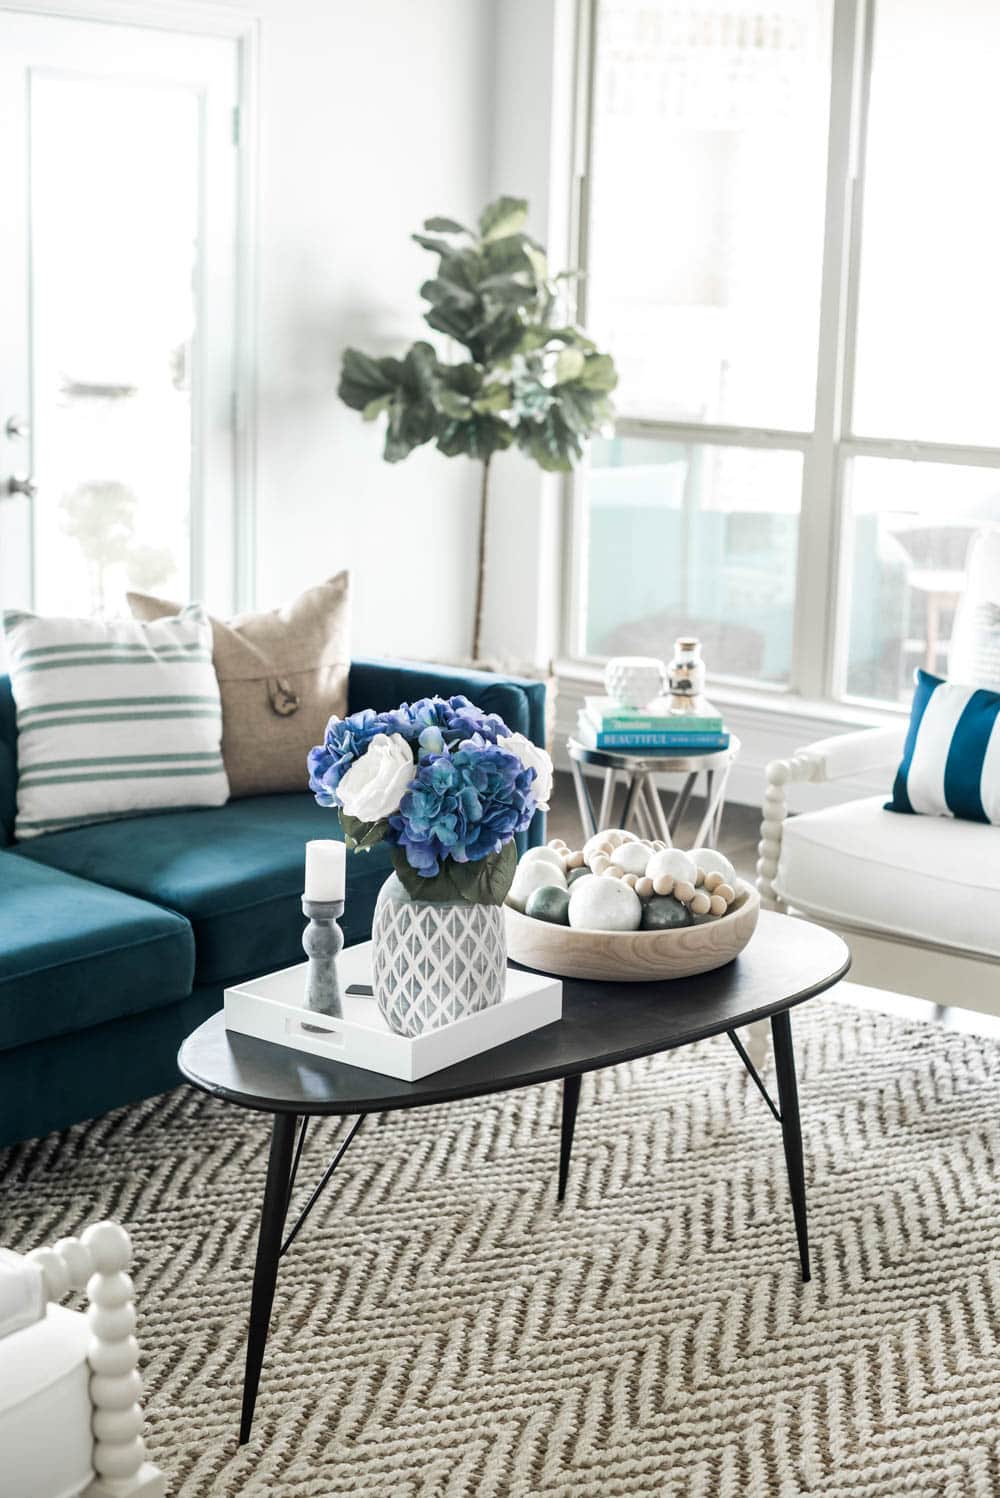 Beautiful coastal living room decor + sources to recreate this living room look. #coastaldecor #livingroomideas #ABlissfulNest #livingroom #coastalhomedecor